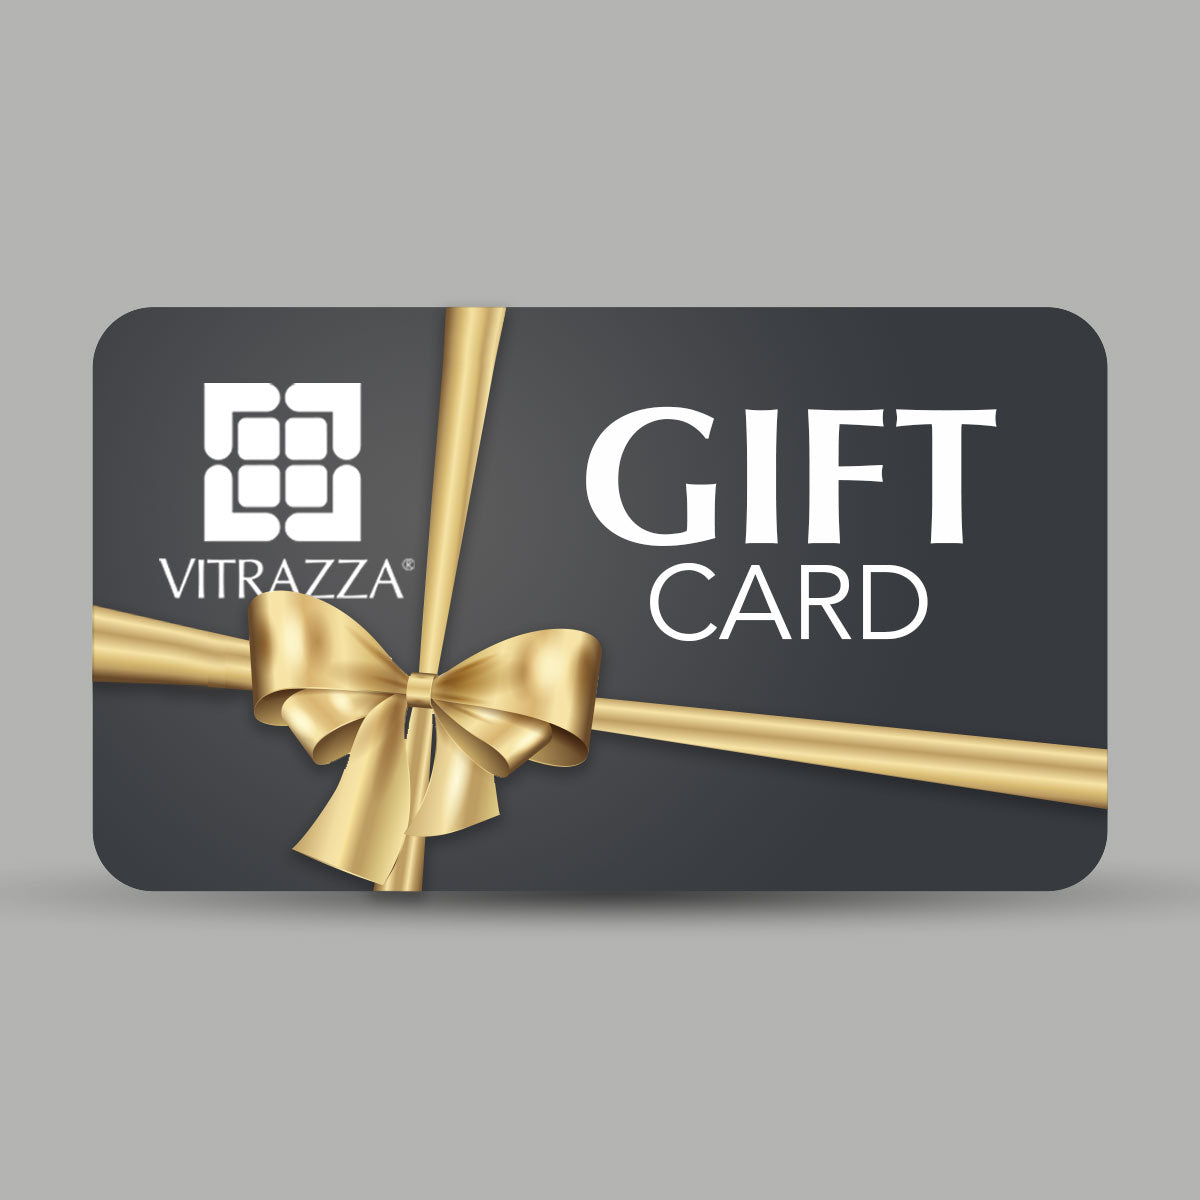 Vitrazza Glass Office Chair Mat Gift Card